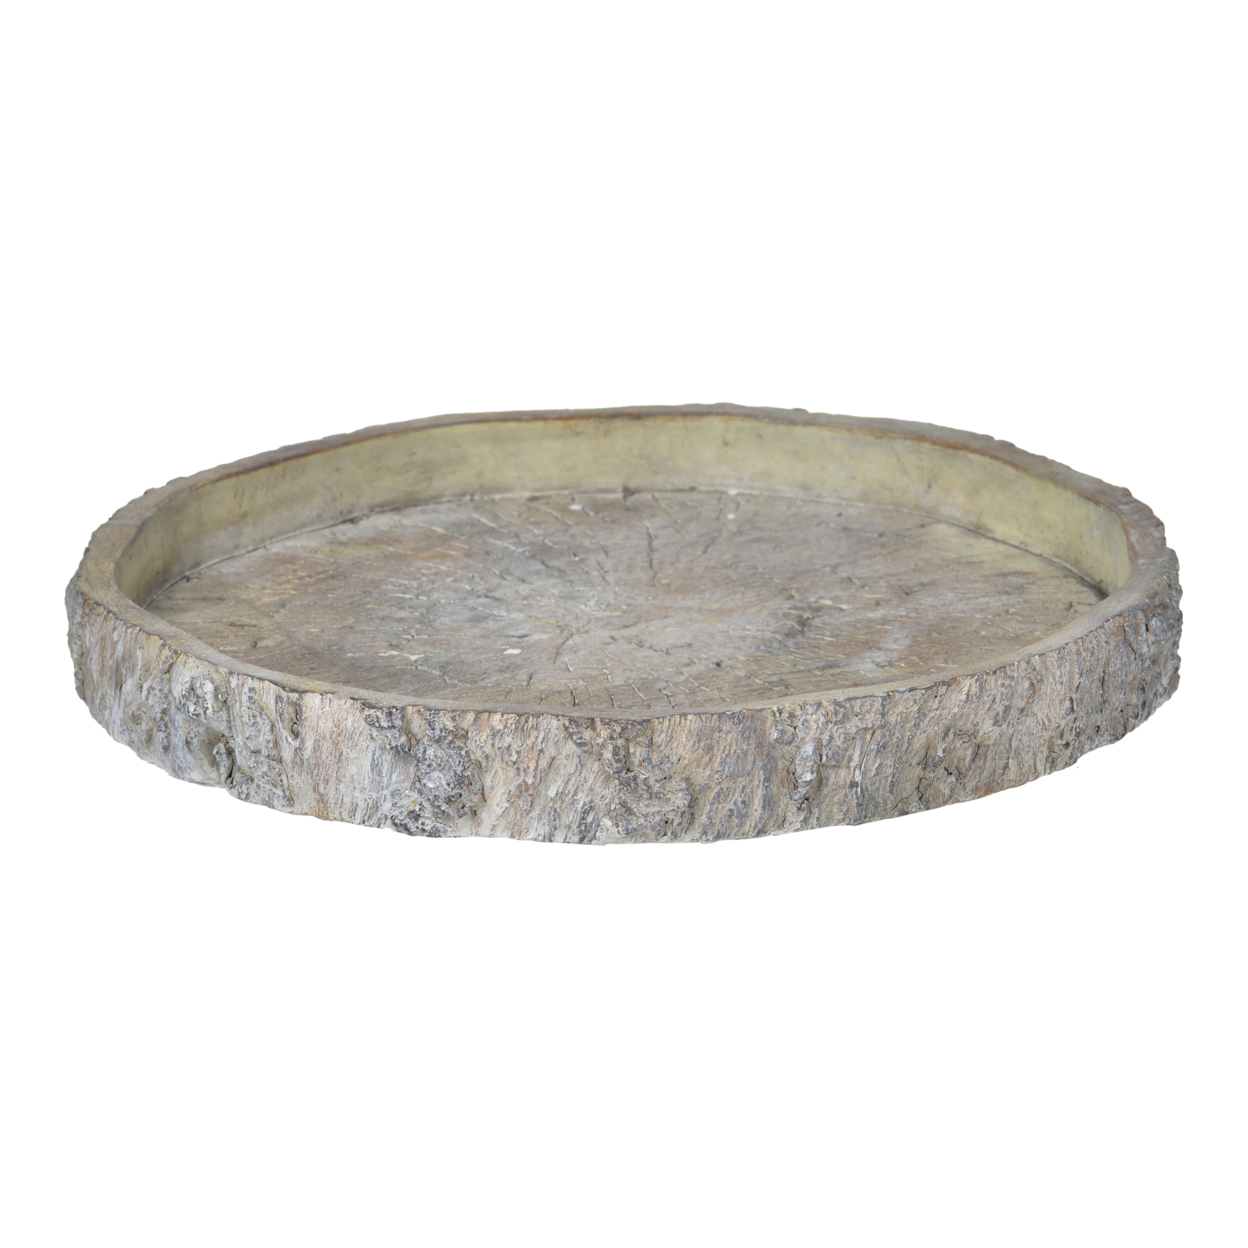 Distressed Round Shape Cemented Log Plate, Gray- Saltoro Sherpi